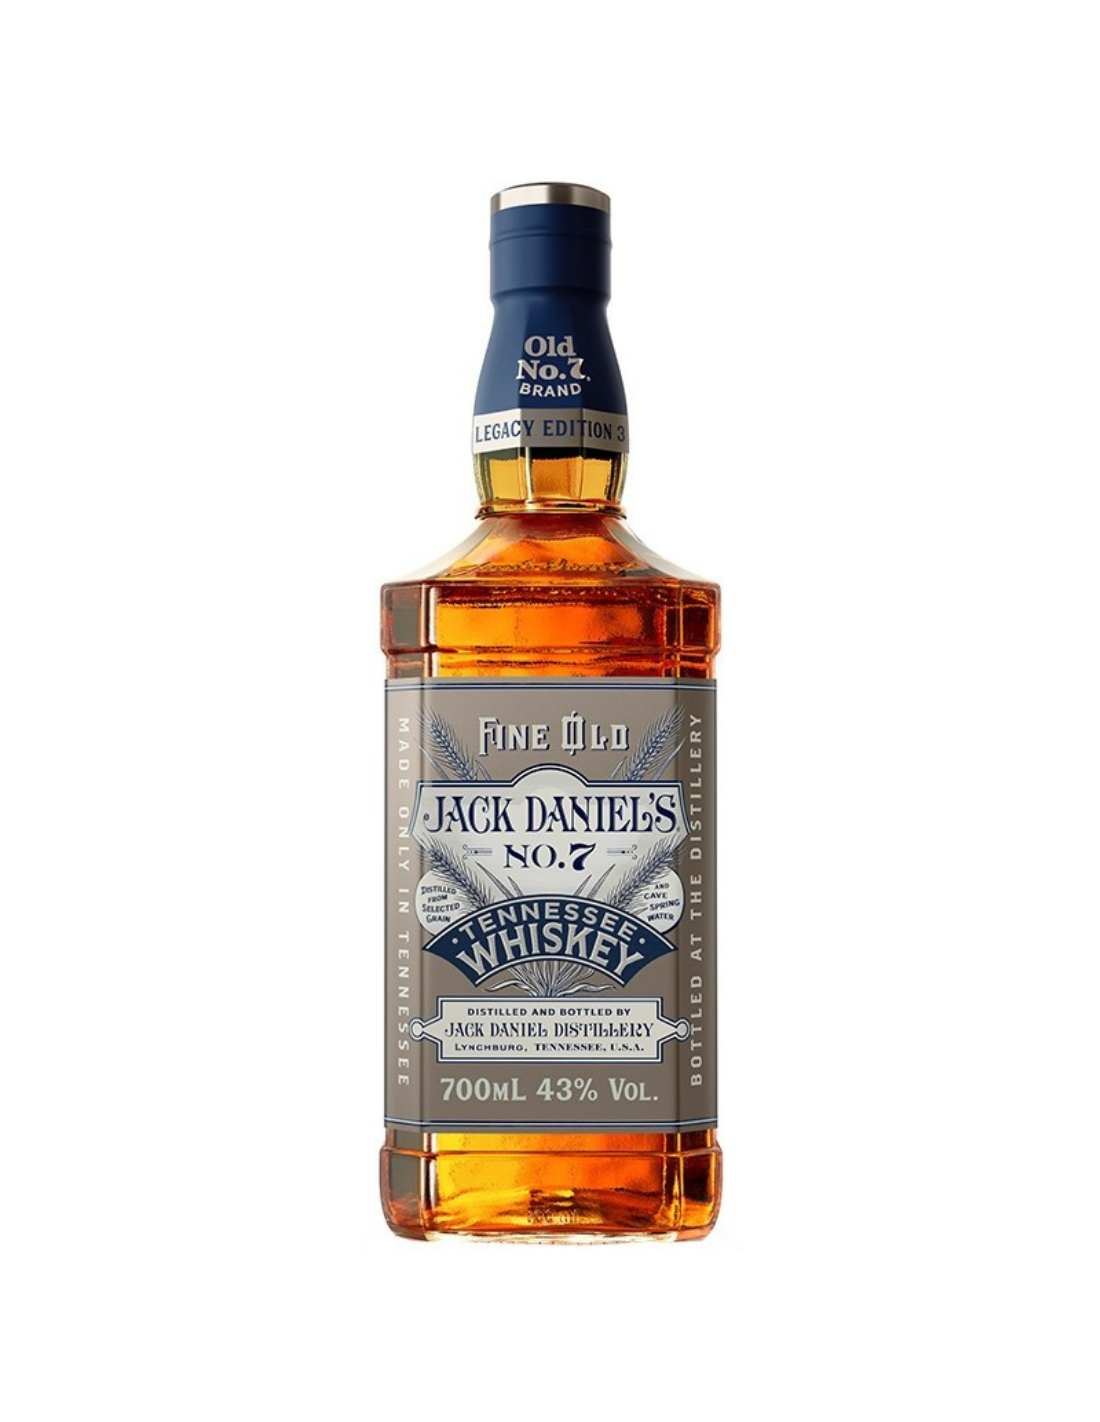 Whisky Jack Daniel’s Legacy No. 3, 0.7L, 43% alc., SUA alcooldiscount.ro